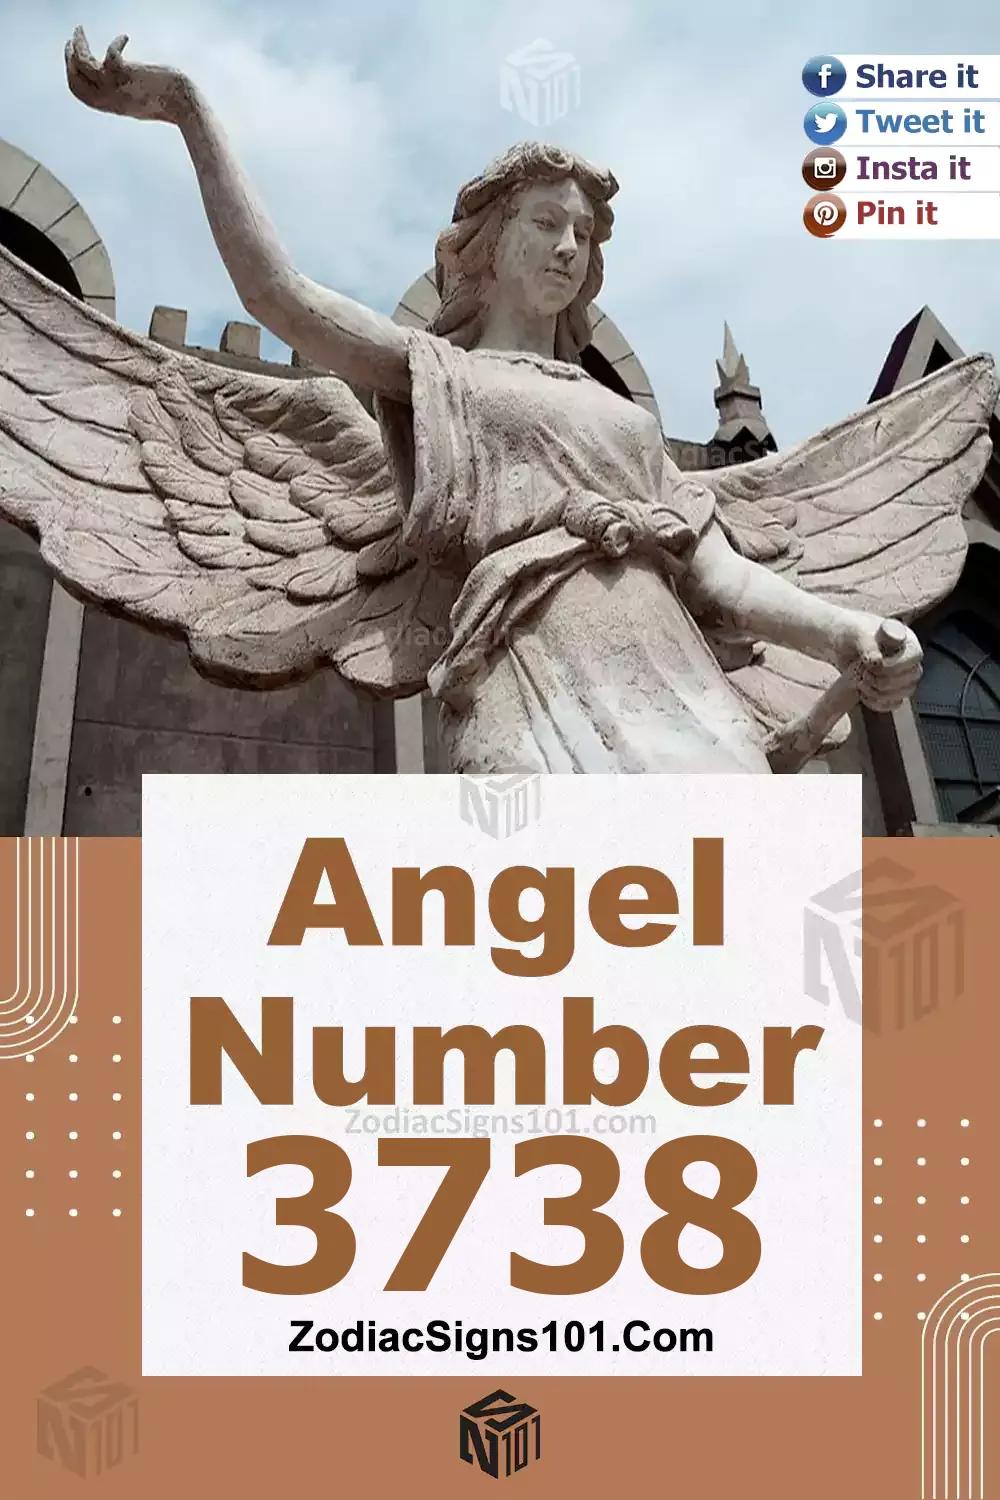 3738-Angel-Number-Meaning.jpg